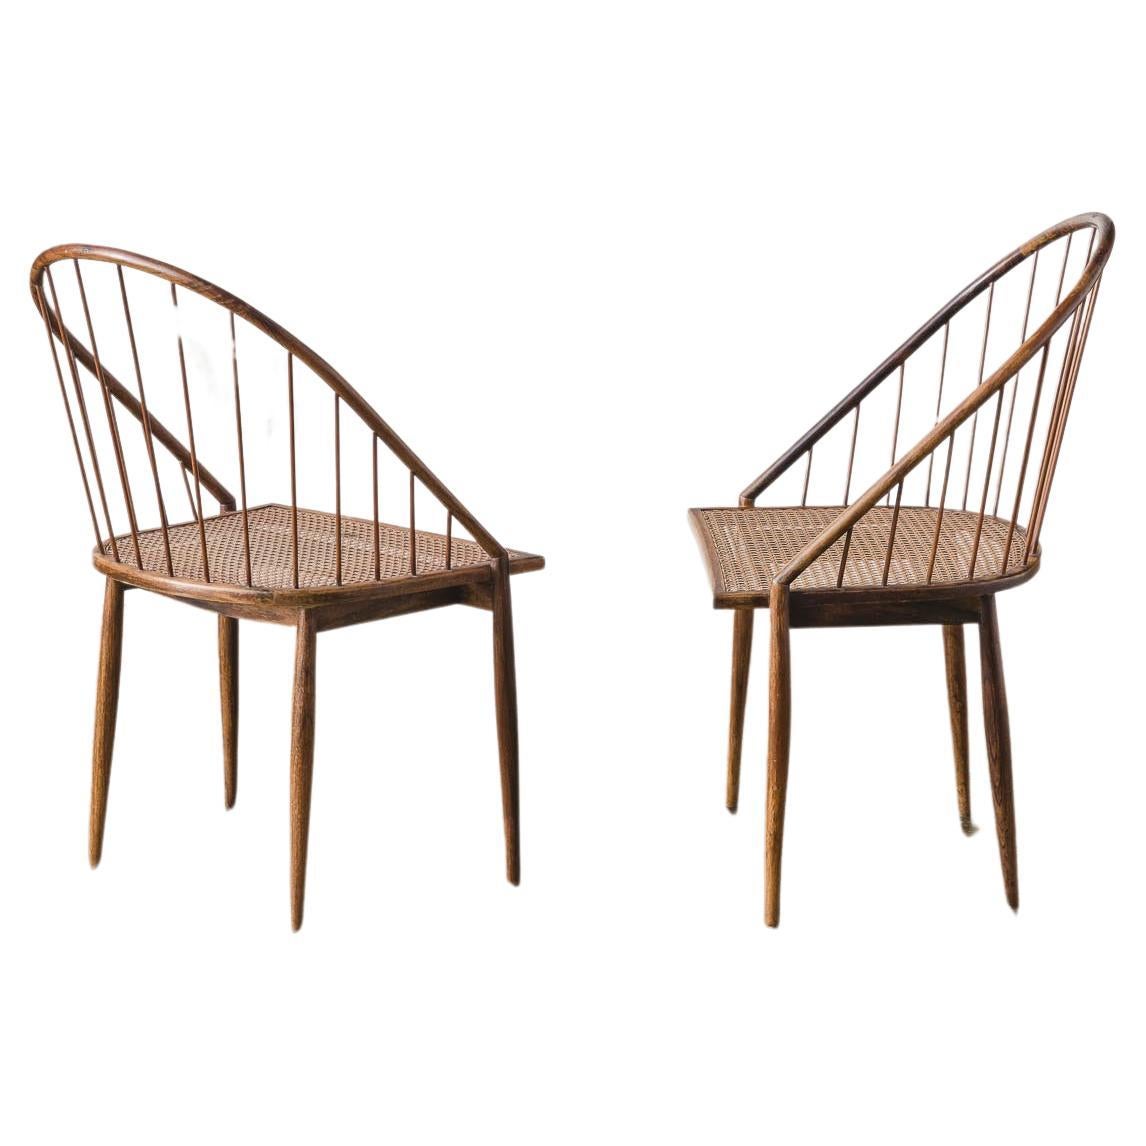 Rare pair of "Curva" chairs by Joaquim Tenreiro For Sale